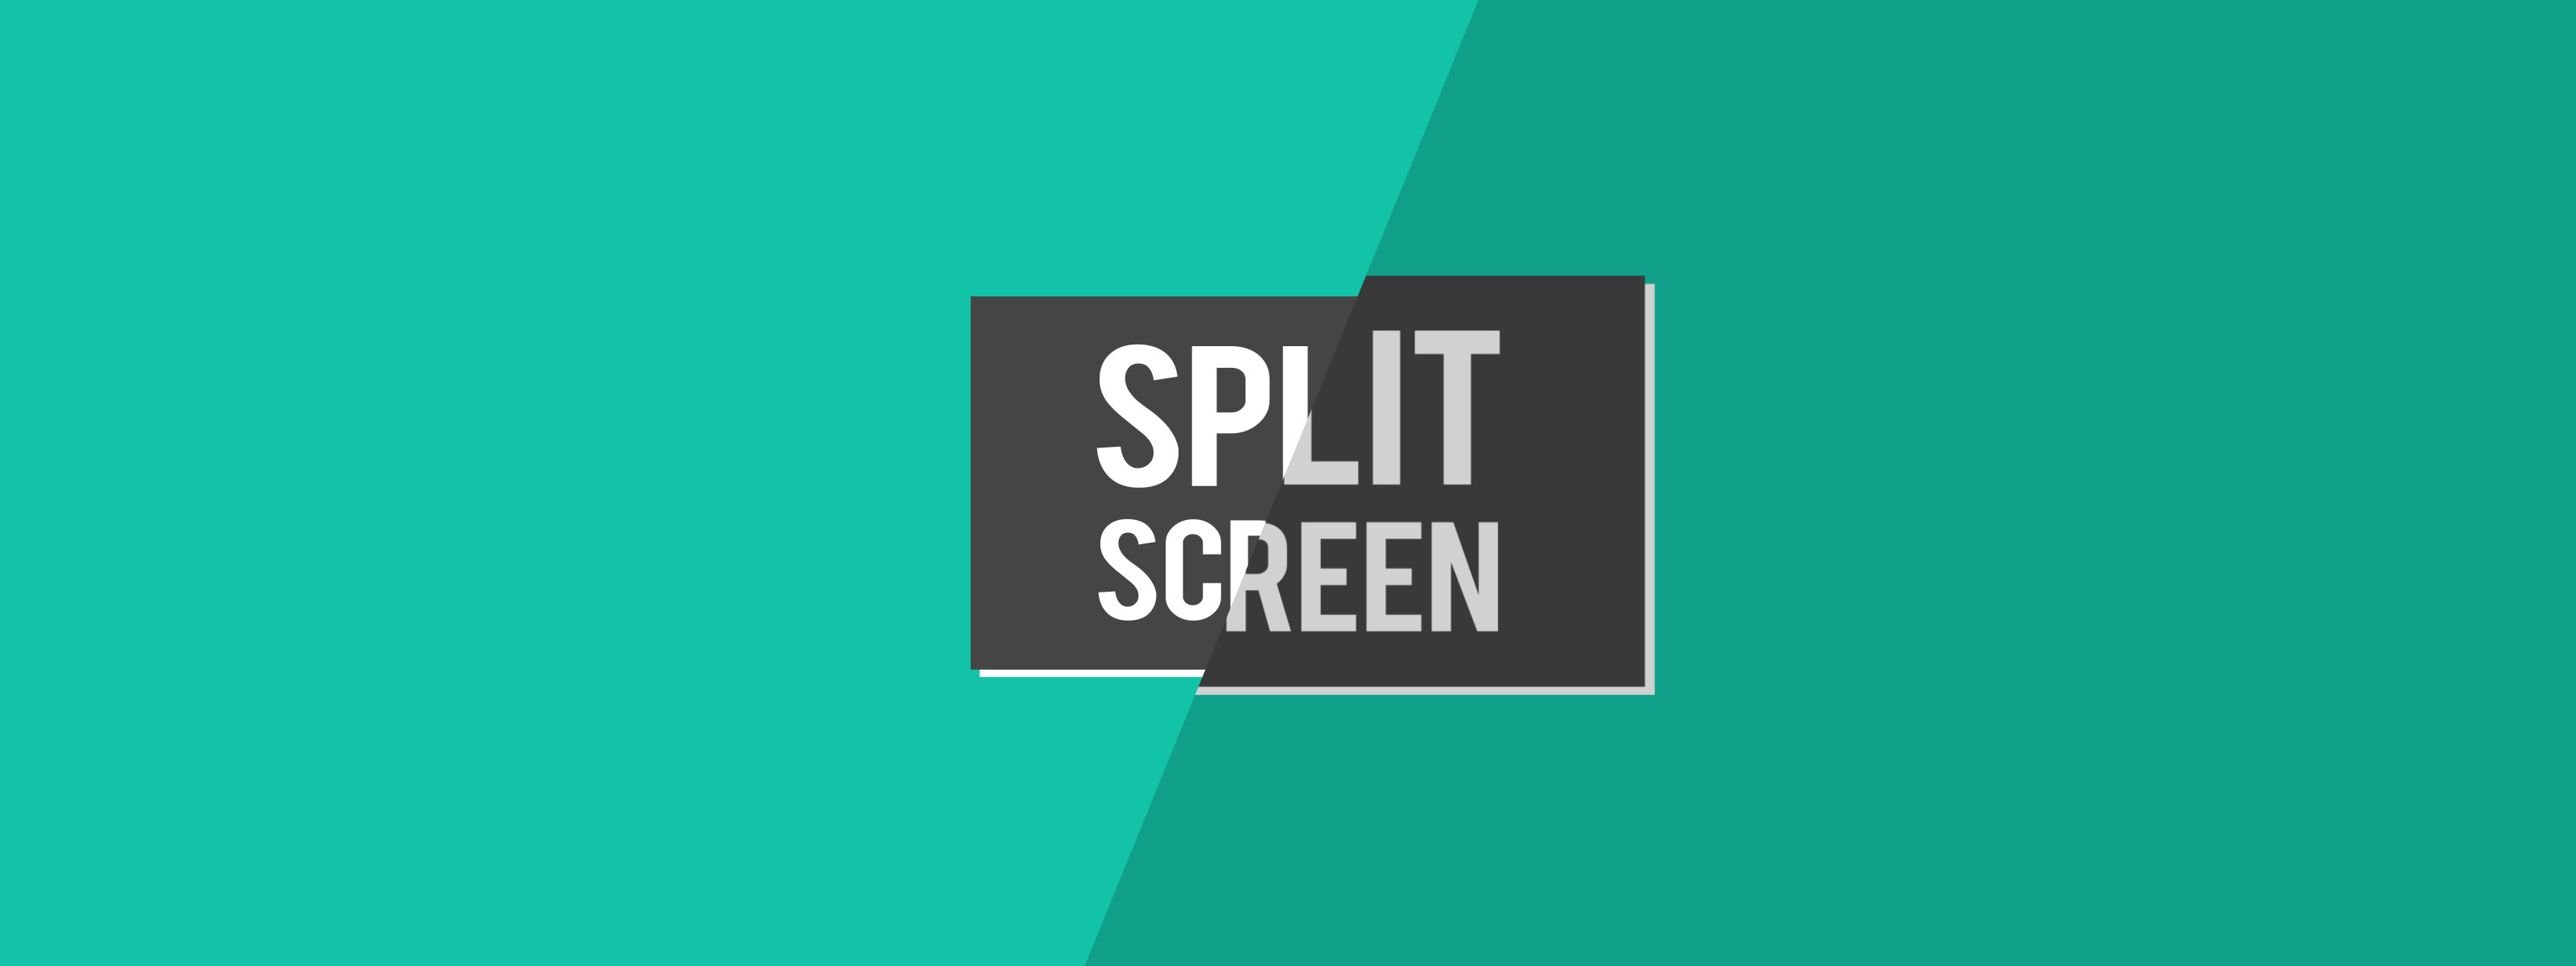 split screen pro create